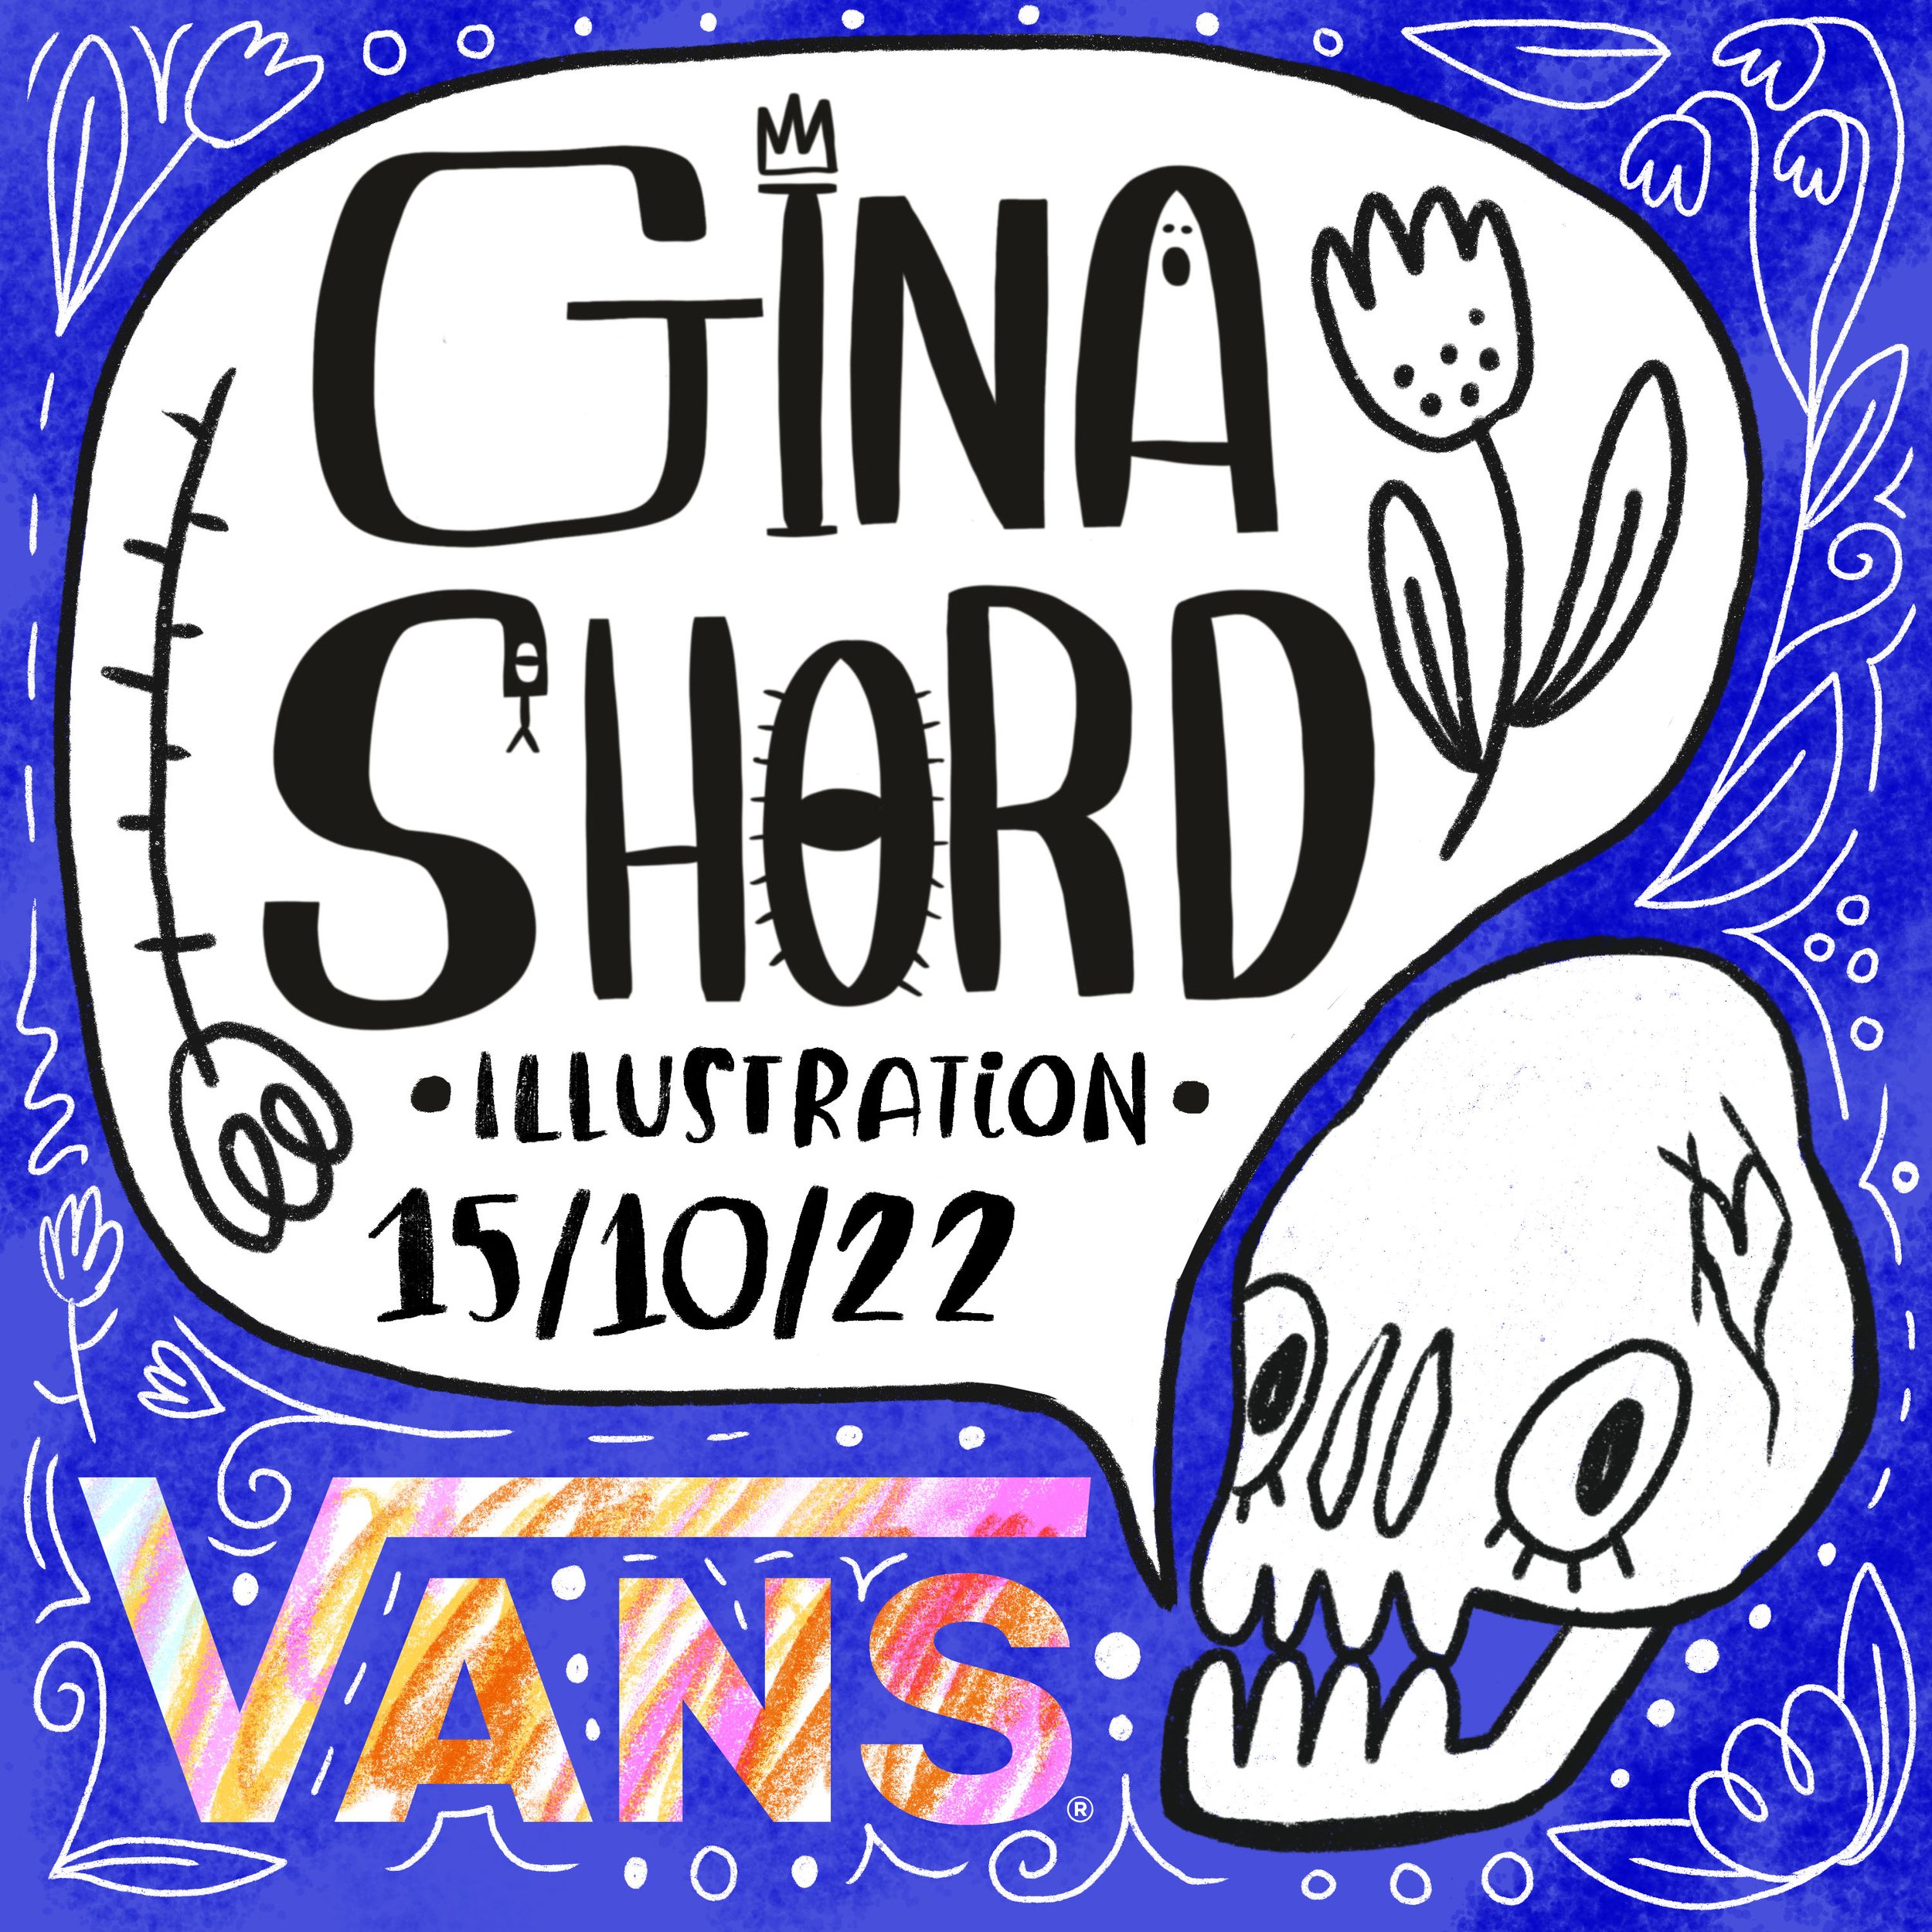 Vans Custom Workshop with Gina Shord